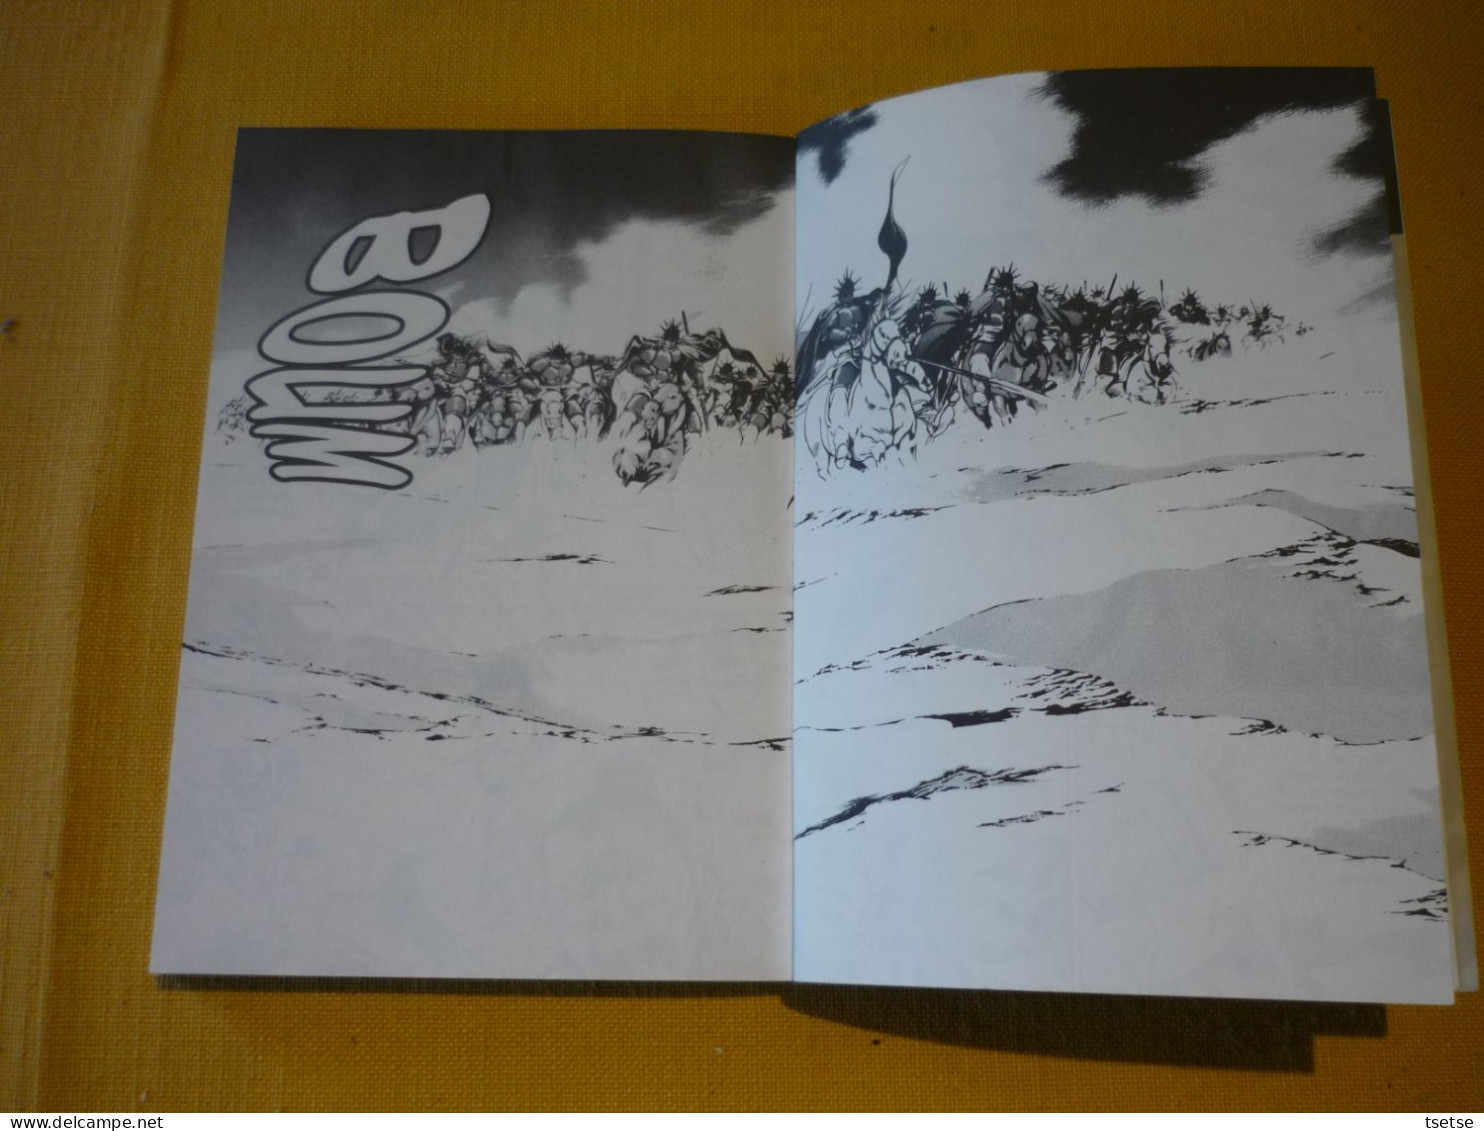 Yongbi 12 / Moon Jung Hoo / Editions Tokebi - 1999 / Edition Française 2005 - Mangas Version Française